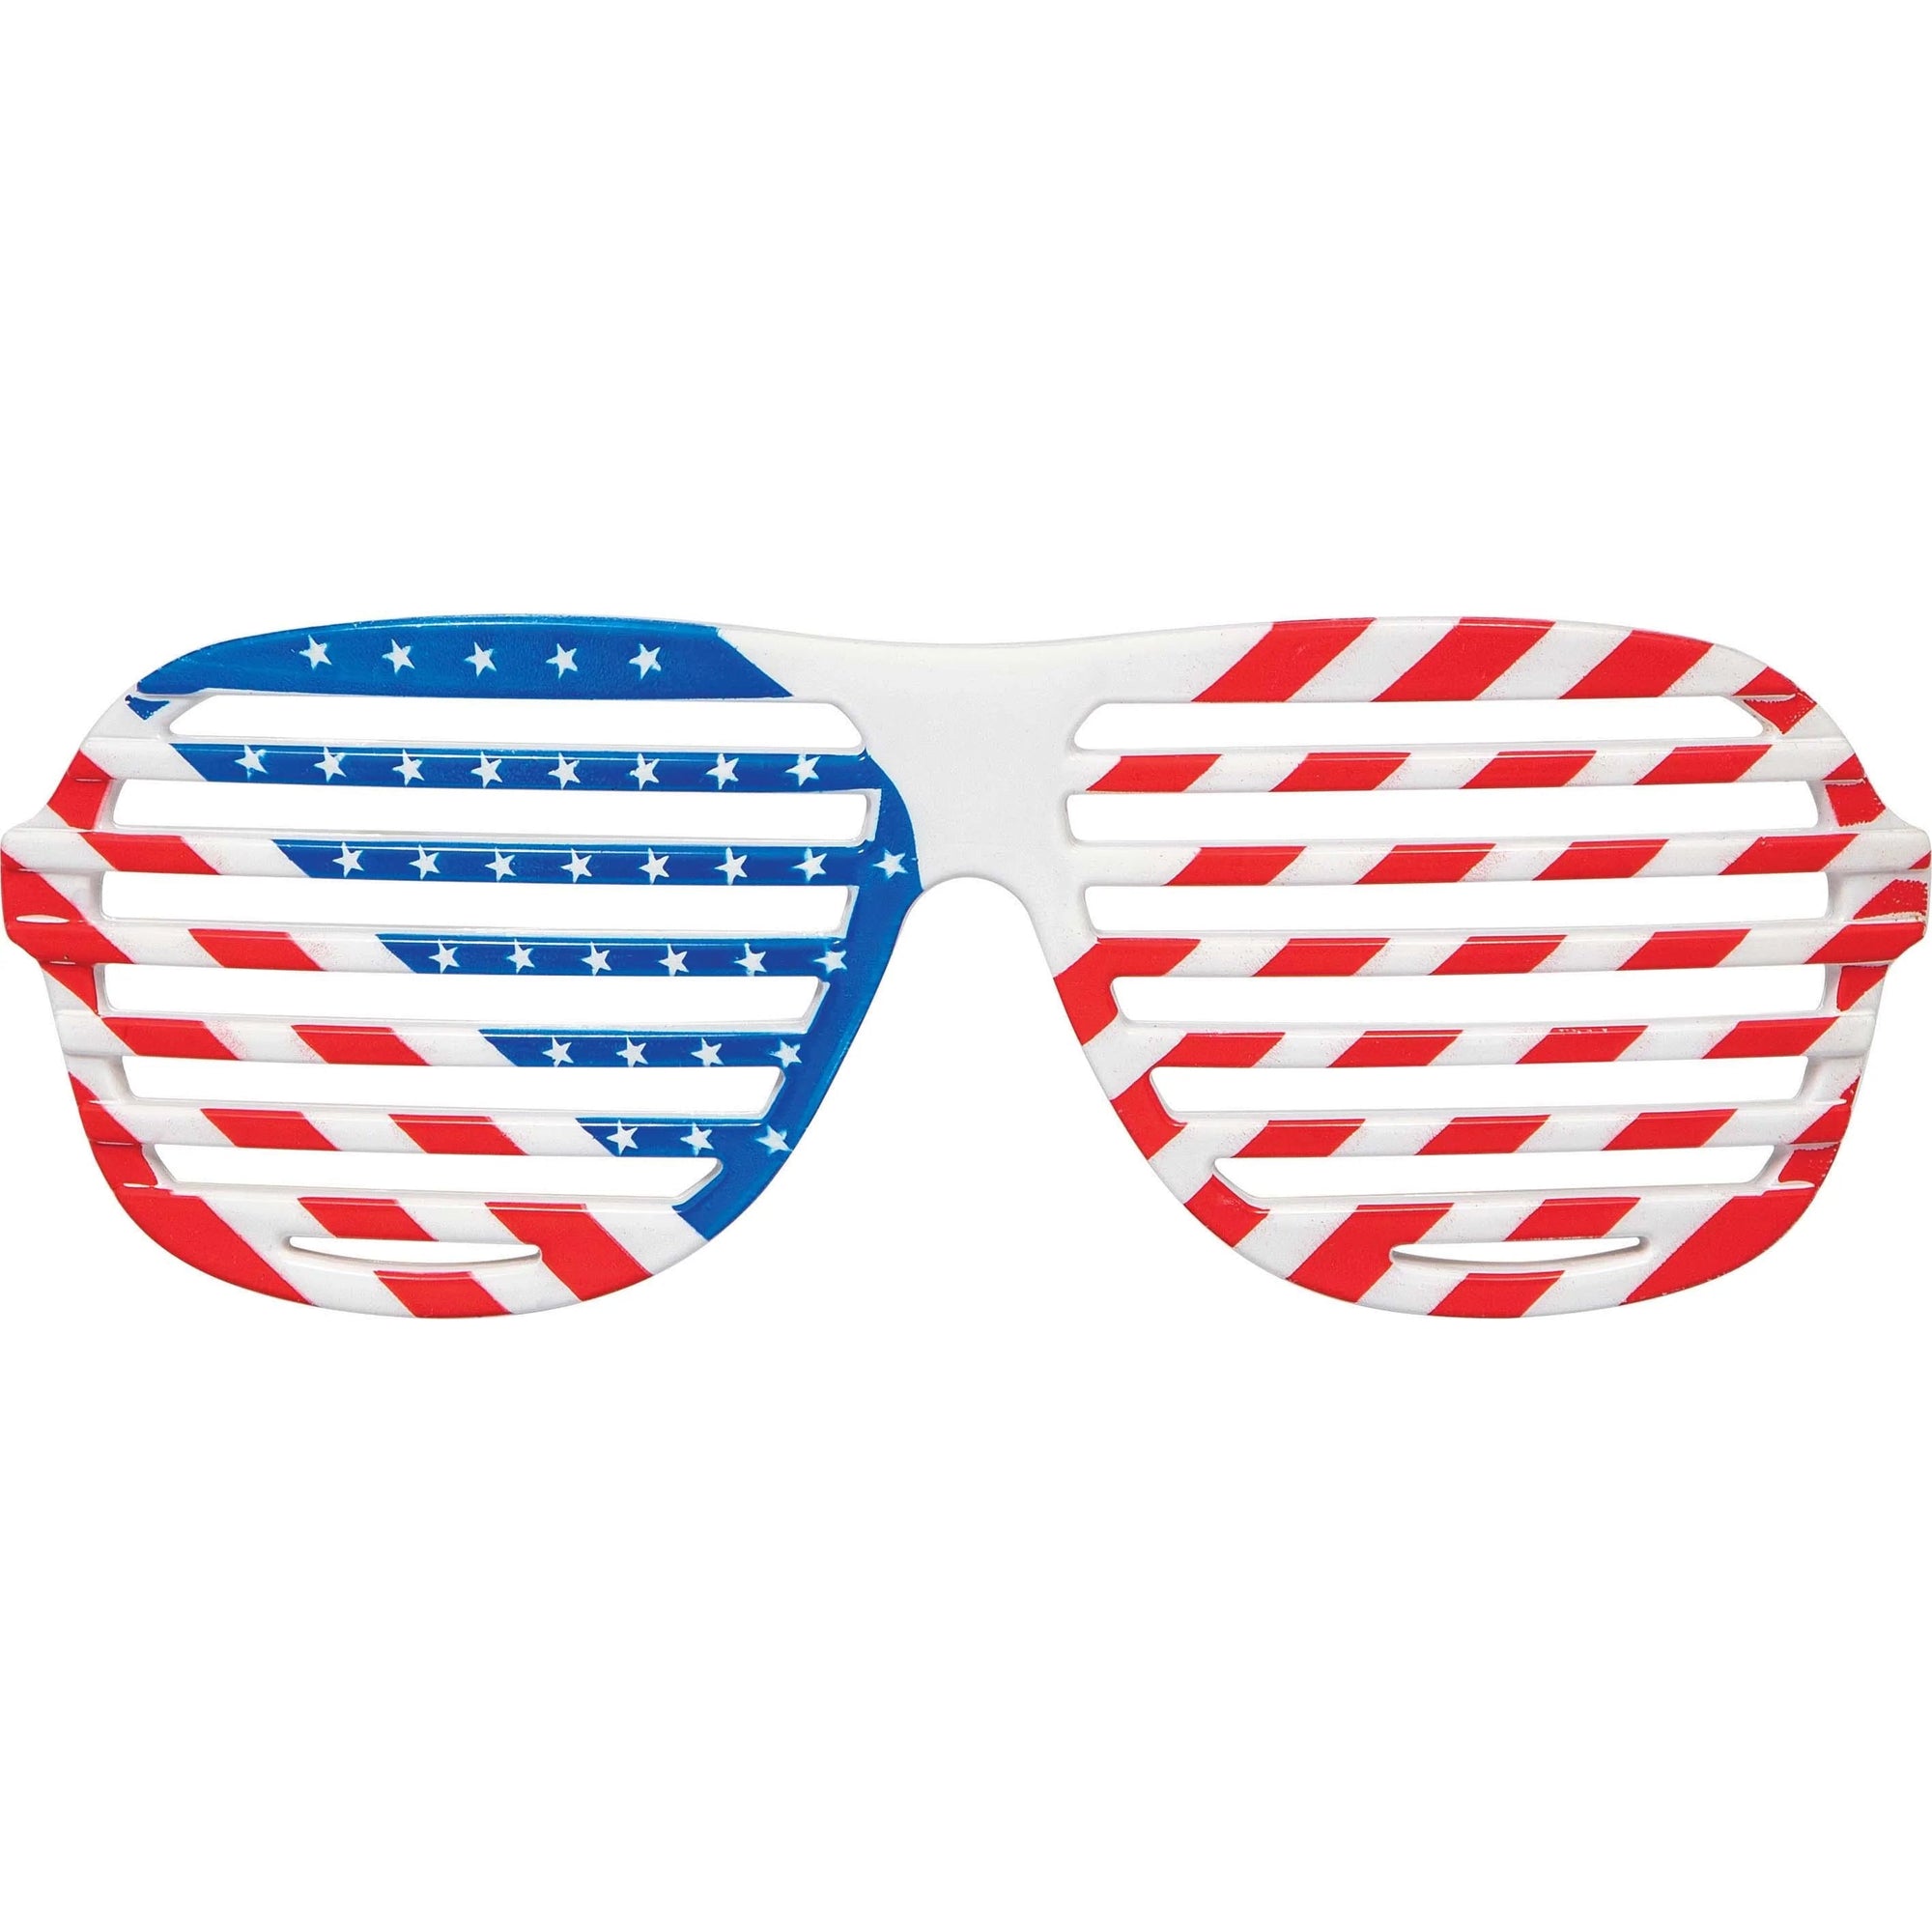 Bulk Case of Patriotic Glasses Favor by Creative Converting